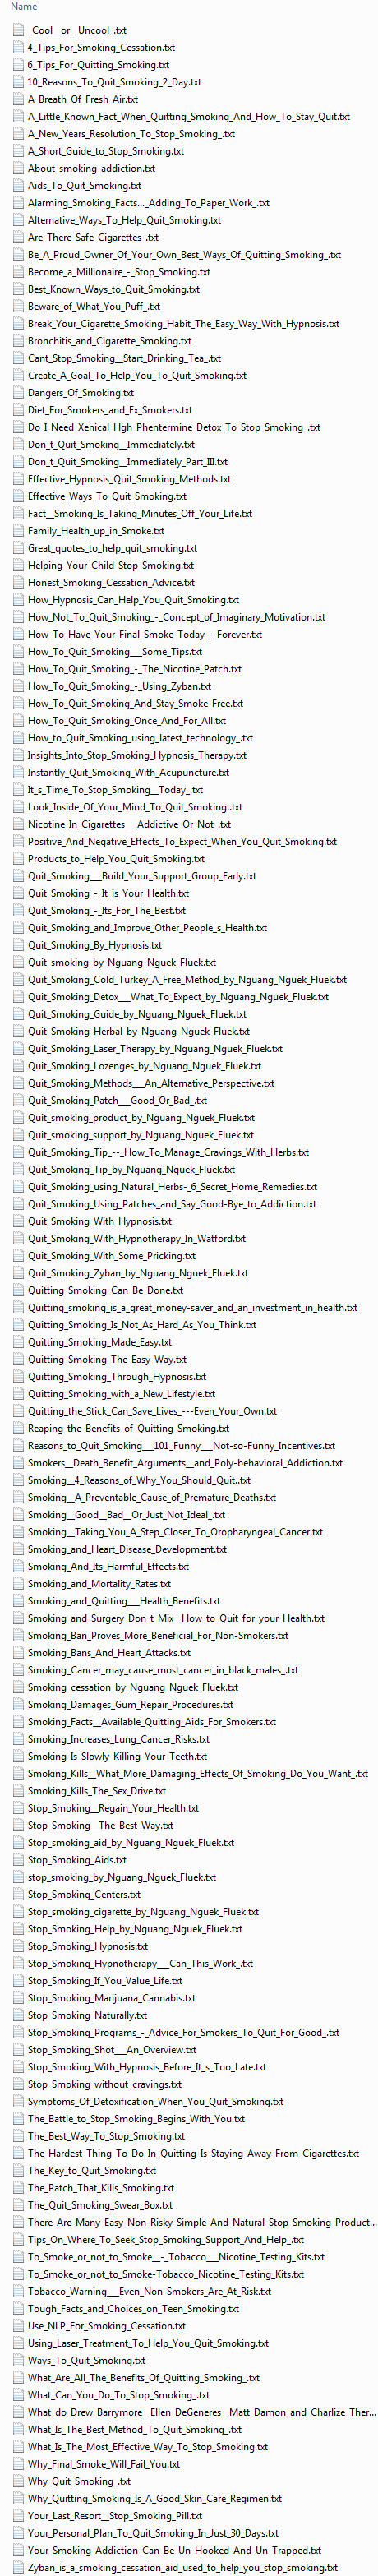 stop smoking plr articles